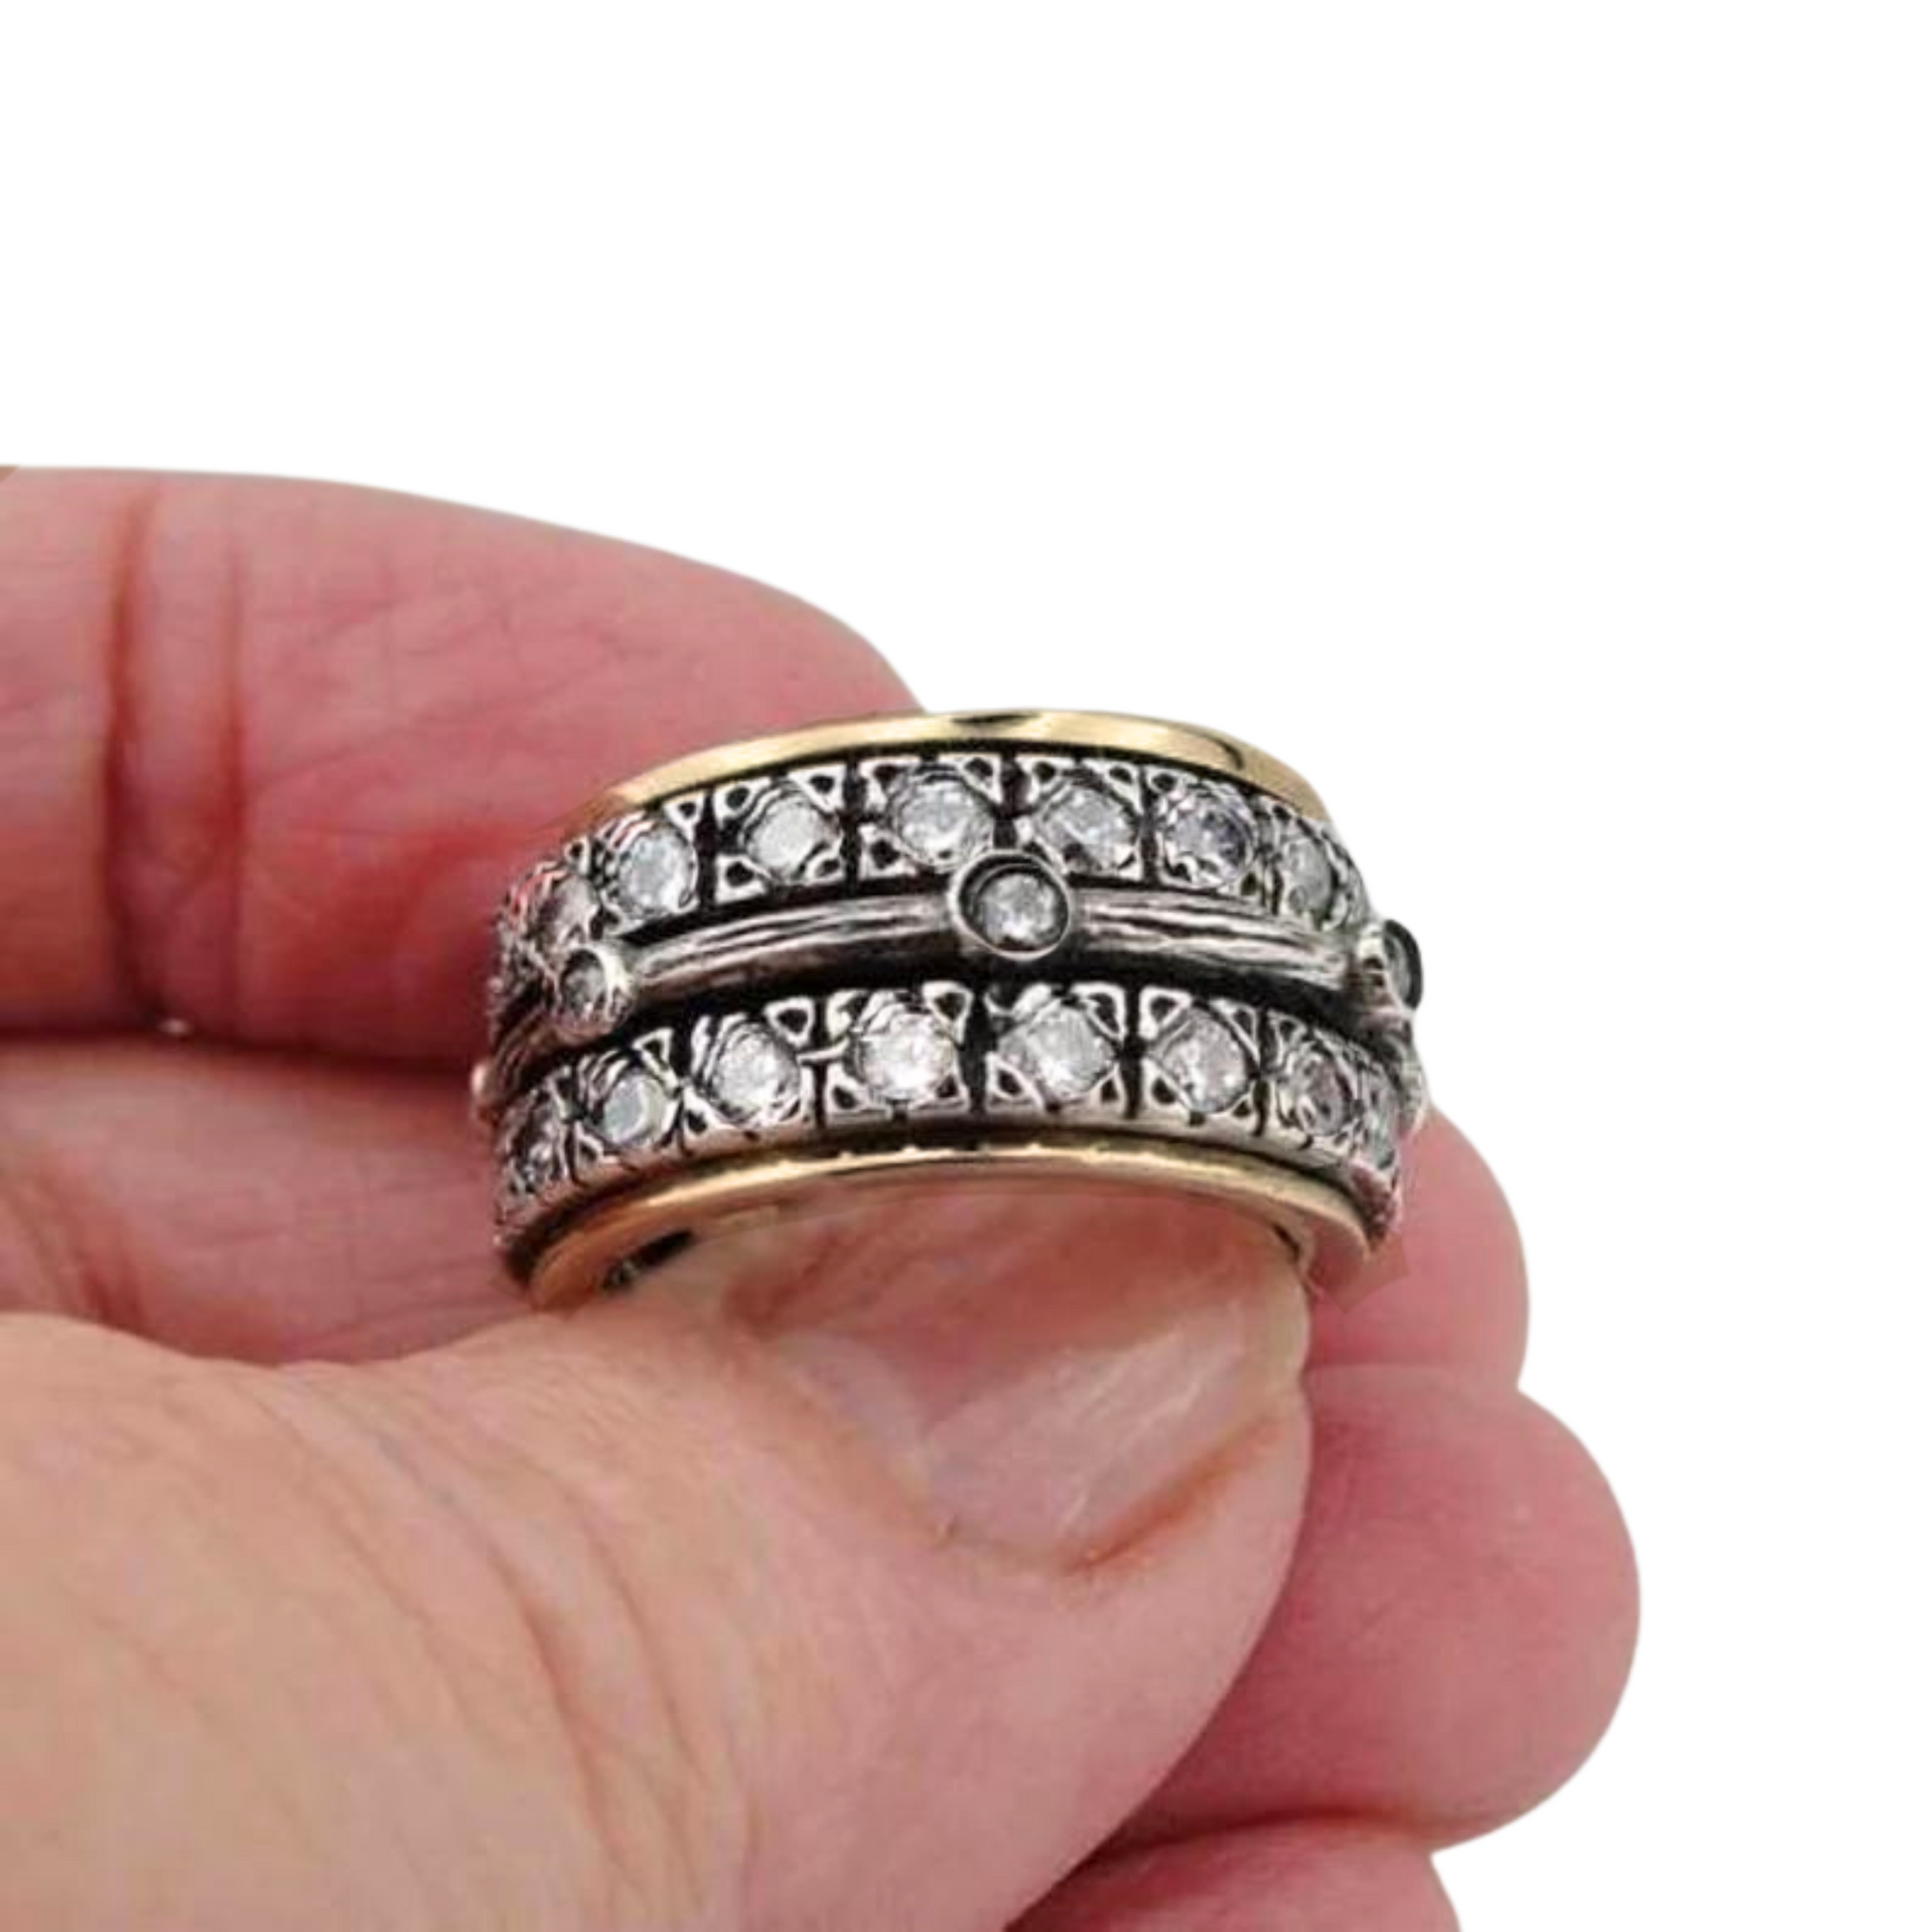 Israeli jewelry, Israeli design, gift for her, unisex, unisex jewelry, unisex ring, gemstone ring, 